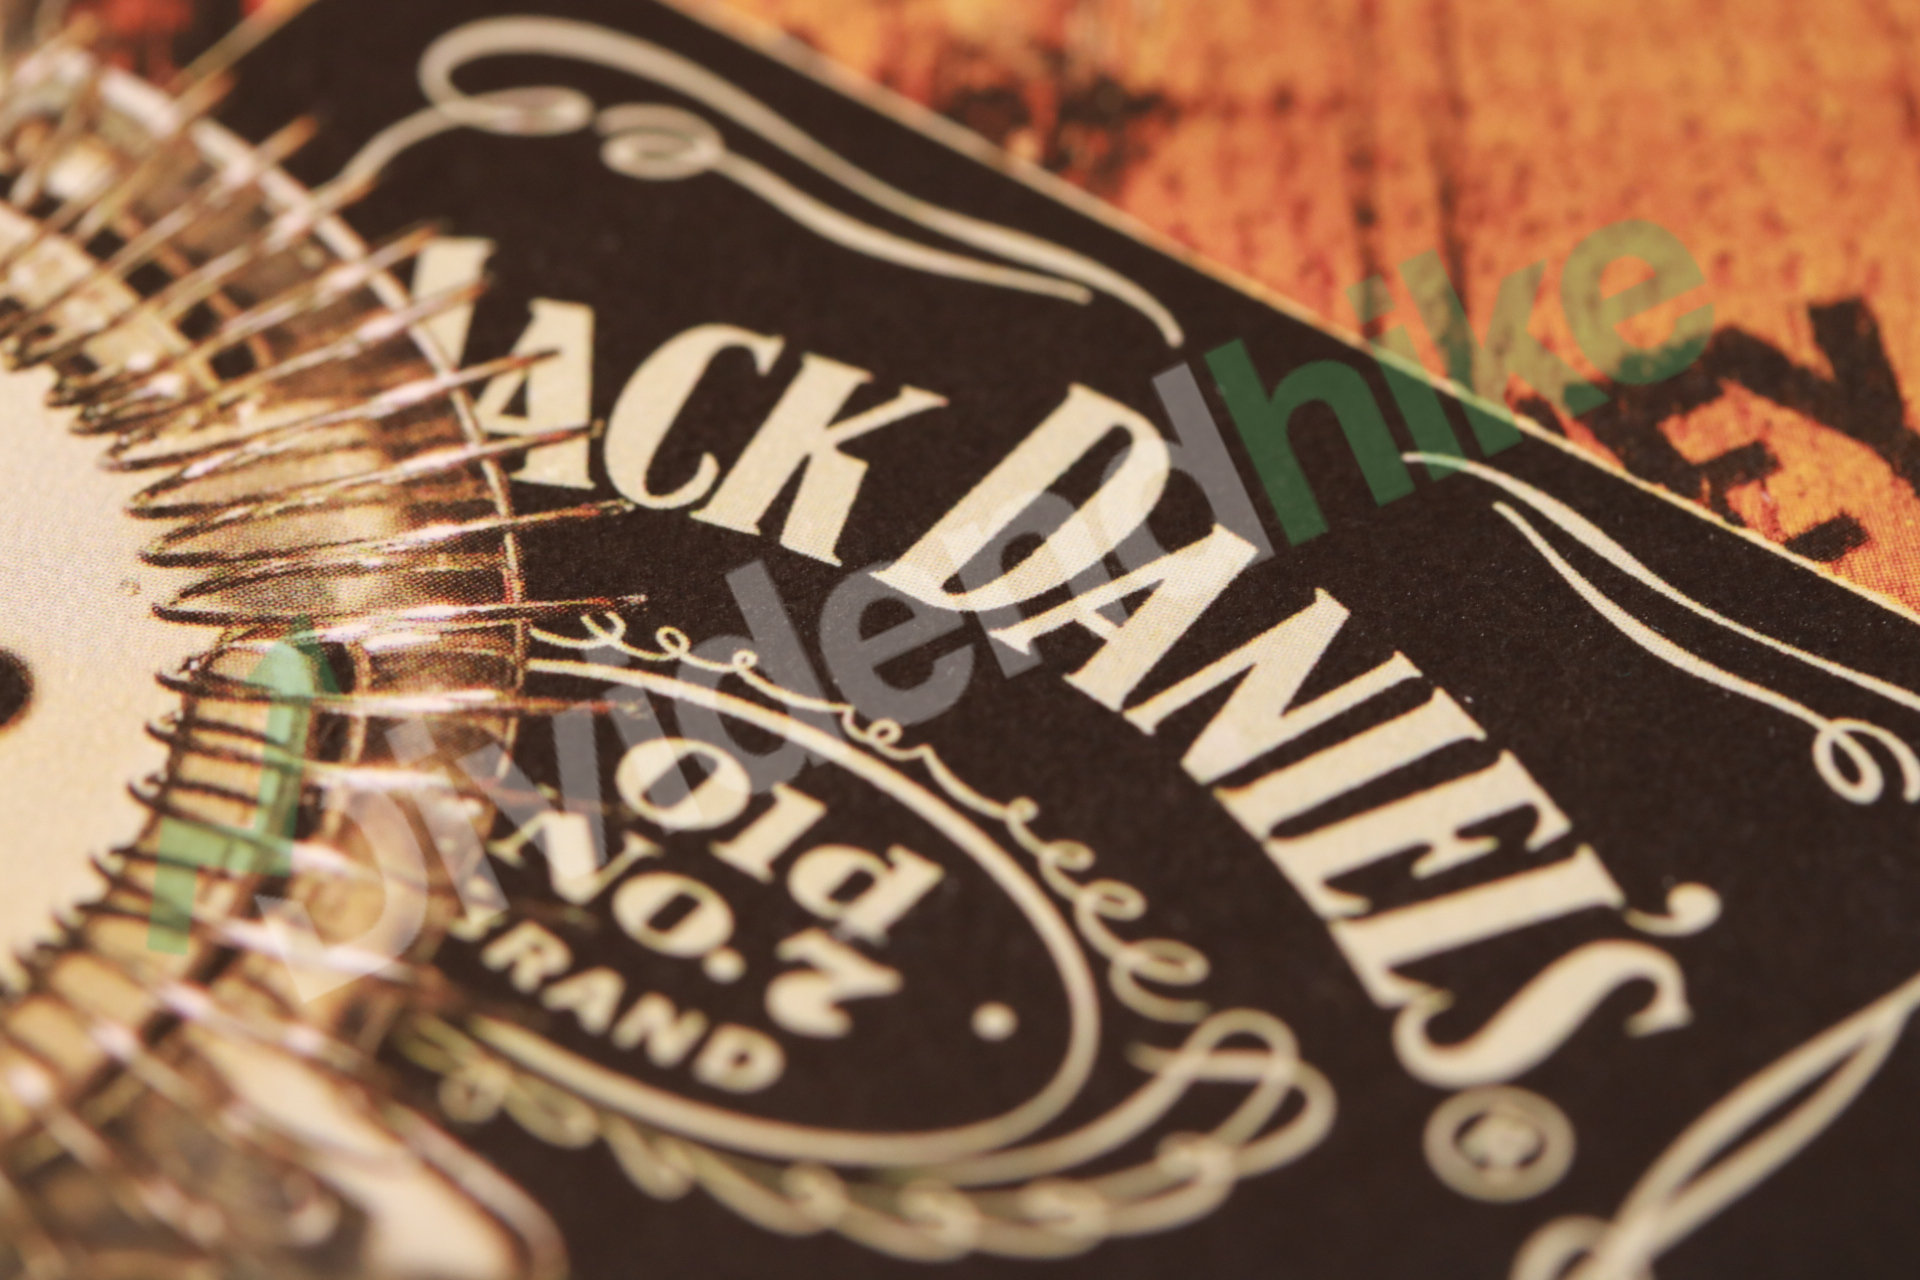 Jack Daniel’s is one of Brown-Forman's brands © dividendhike.com